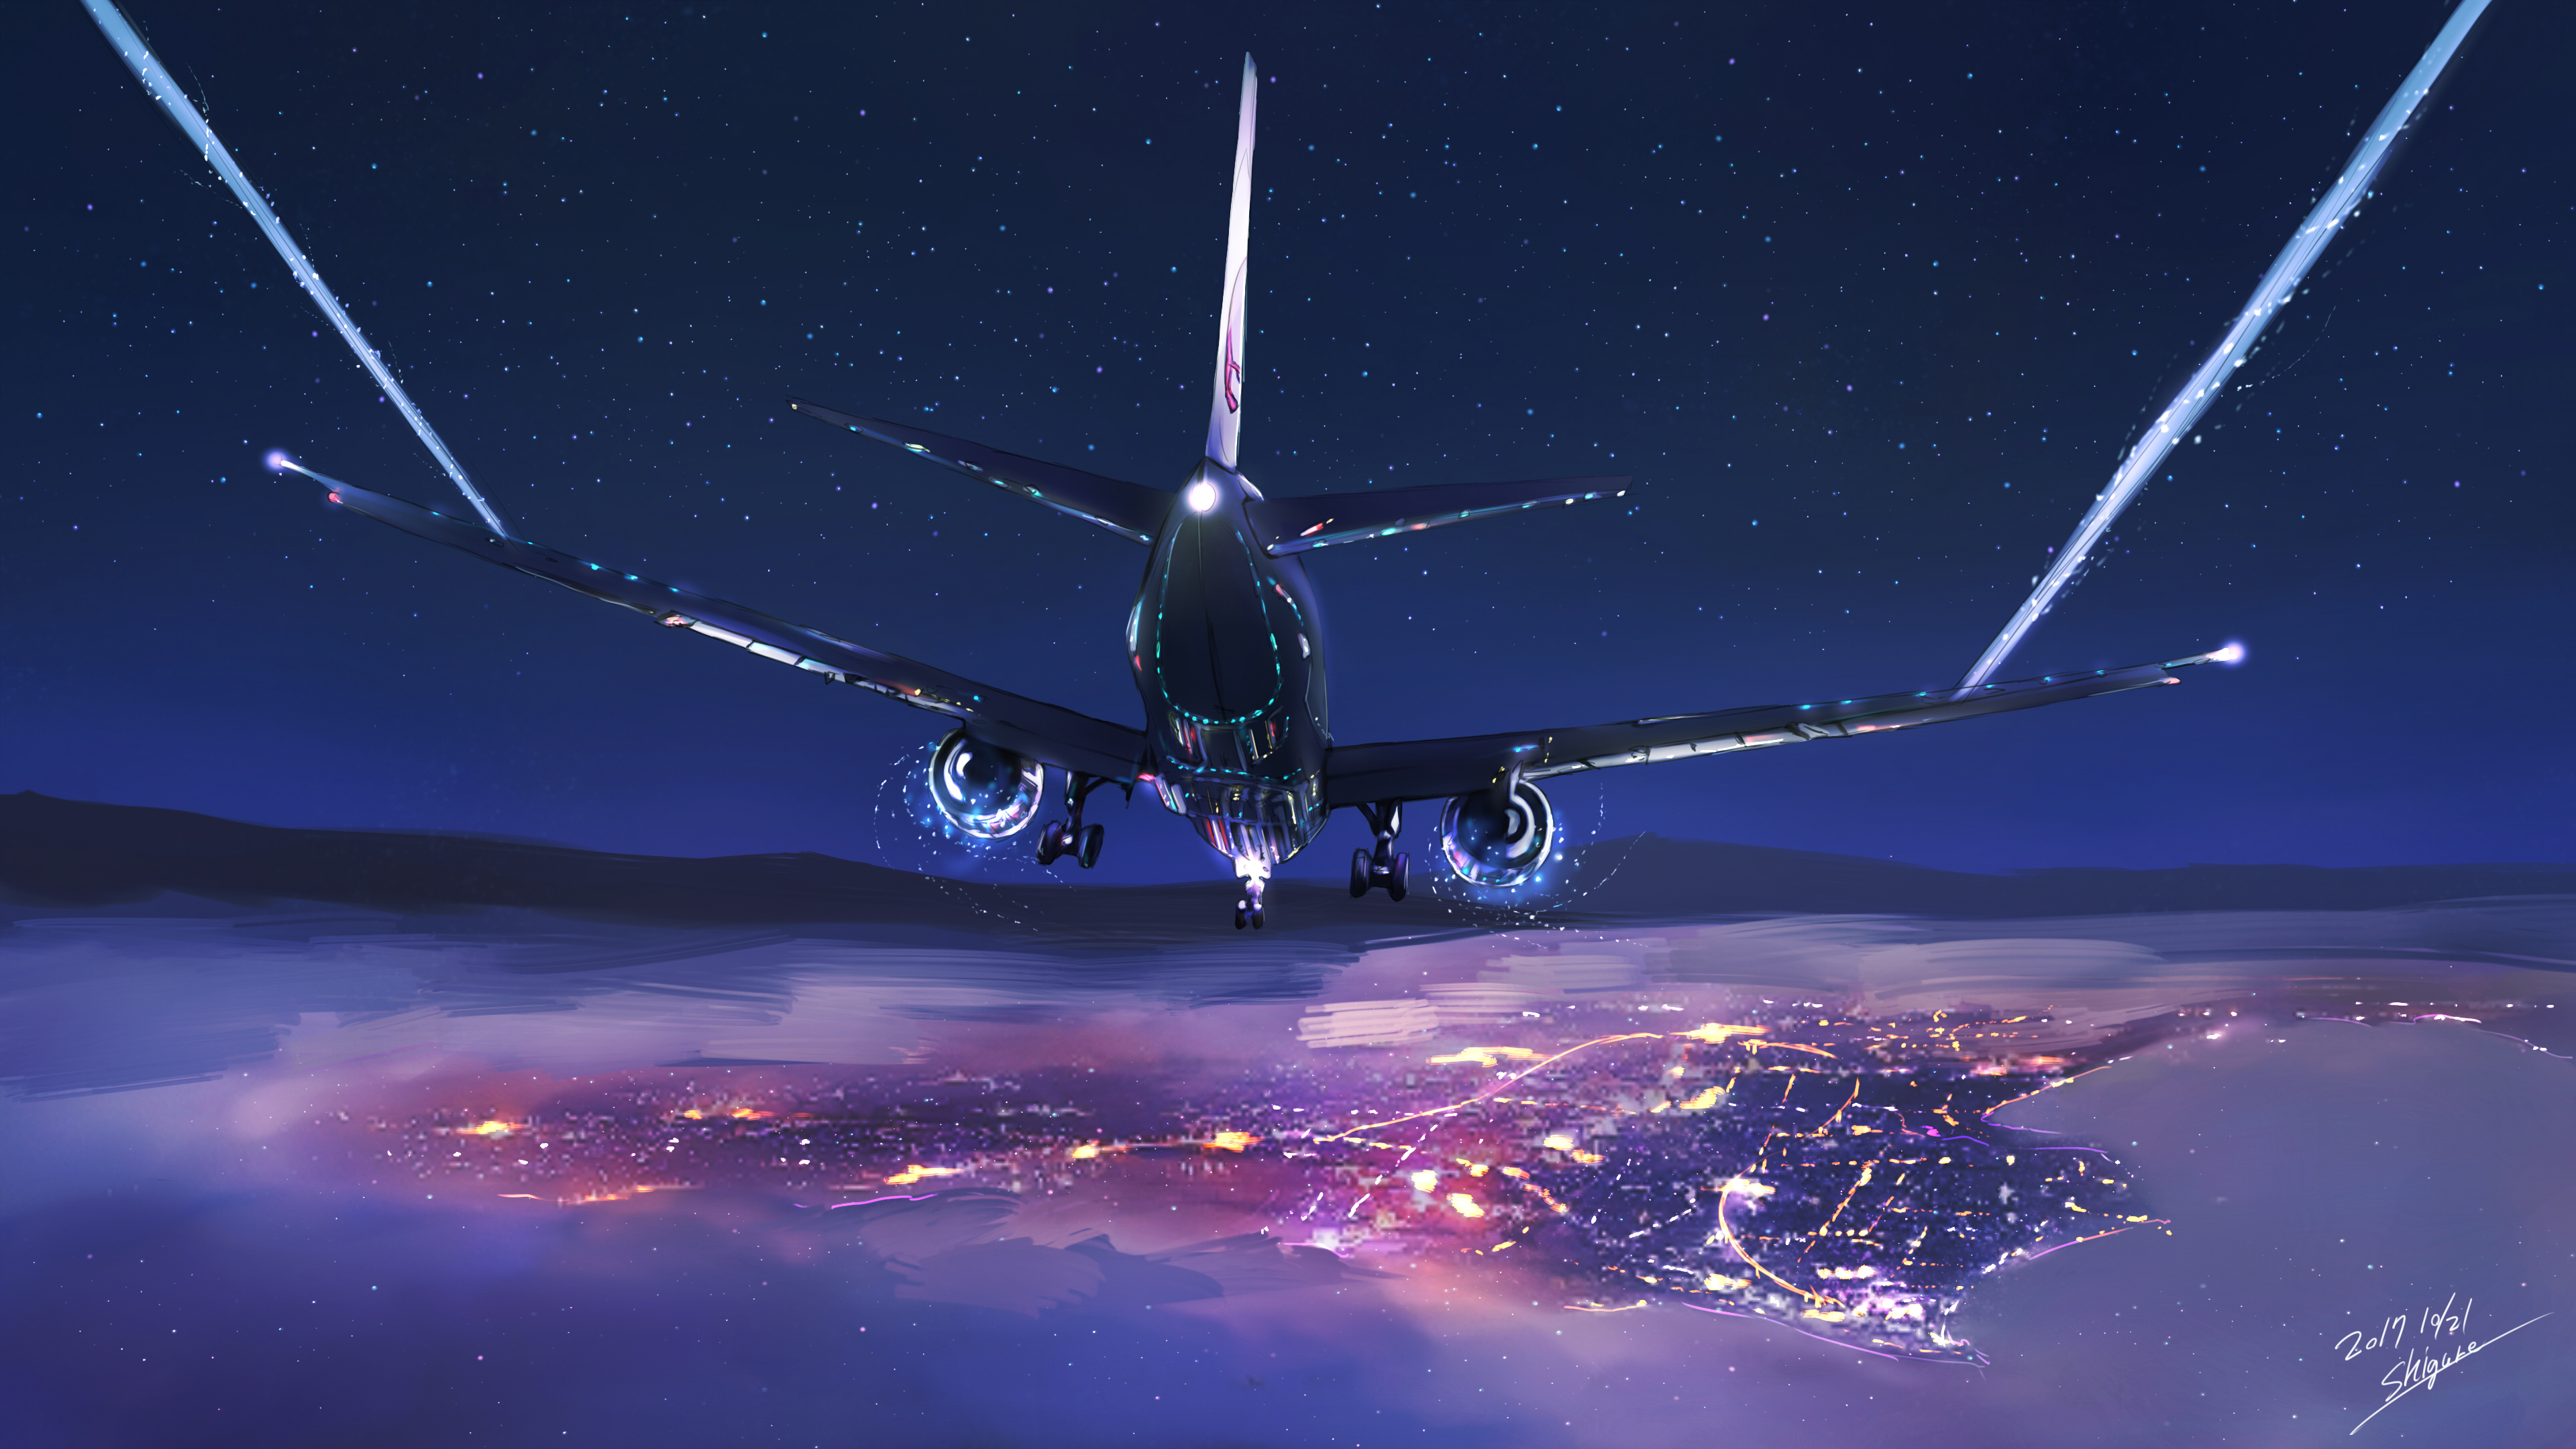 General 3840x2160 city clouds sky city lights stars night drawing digital art airplane Airbus passenger aircraft aircraft vehicle